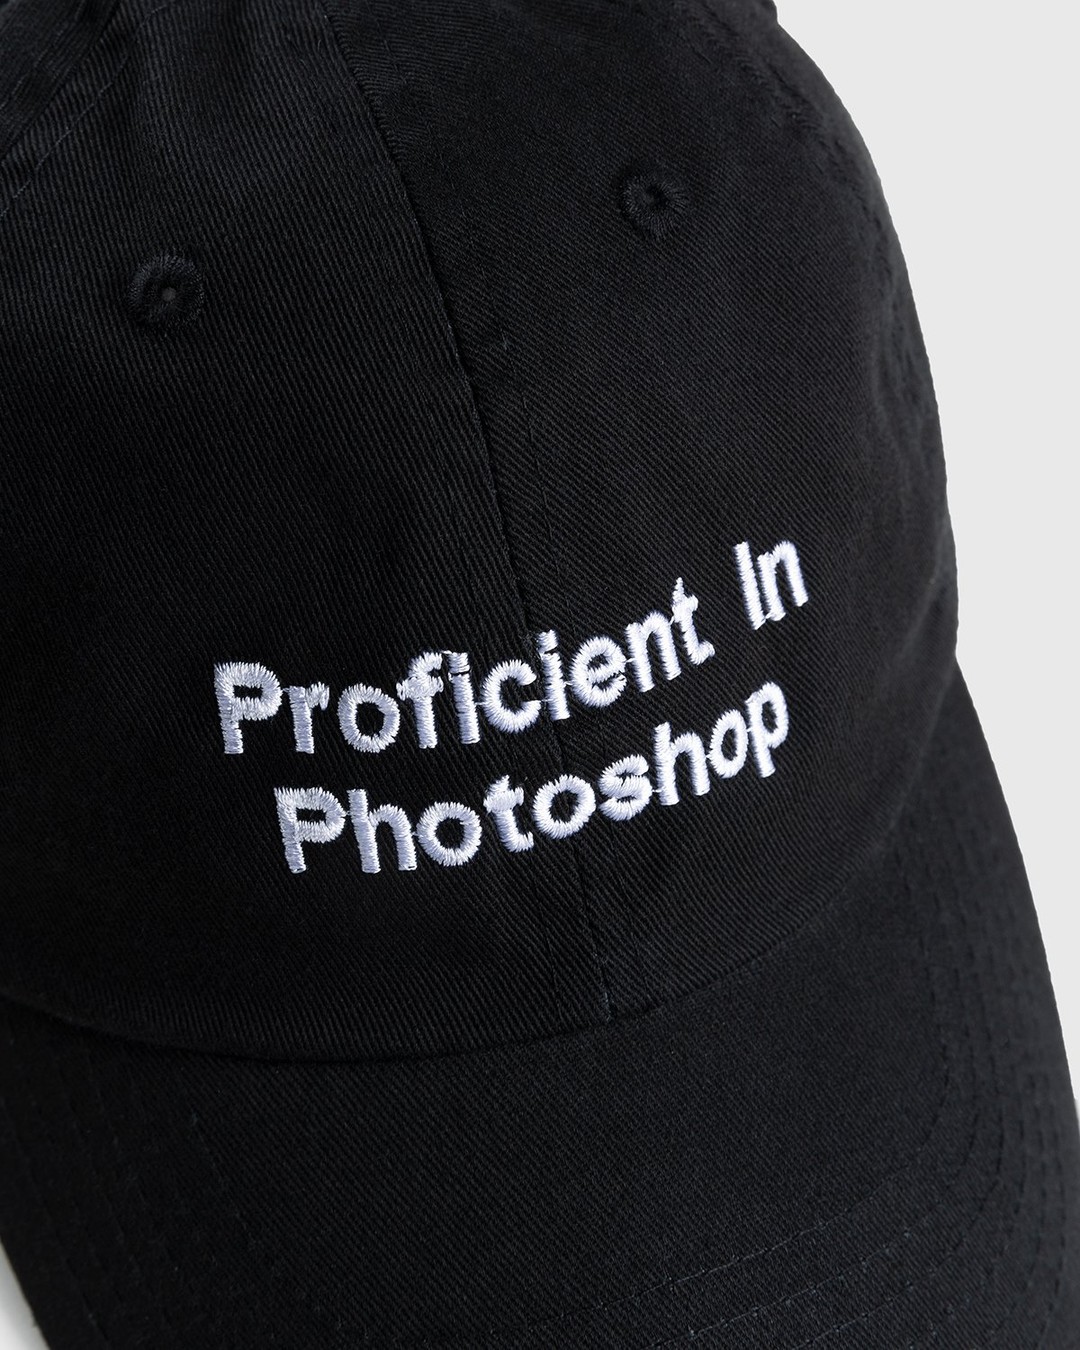 HO HO COCO – Proficient in Photoshop Cap Black  - Hats - Black - Image 4